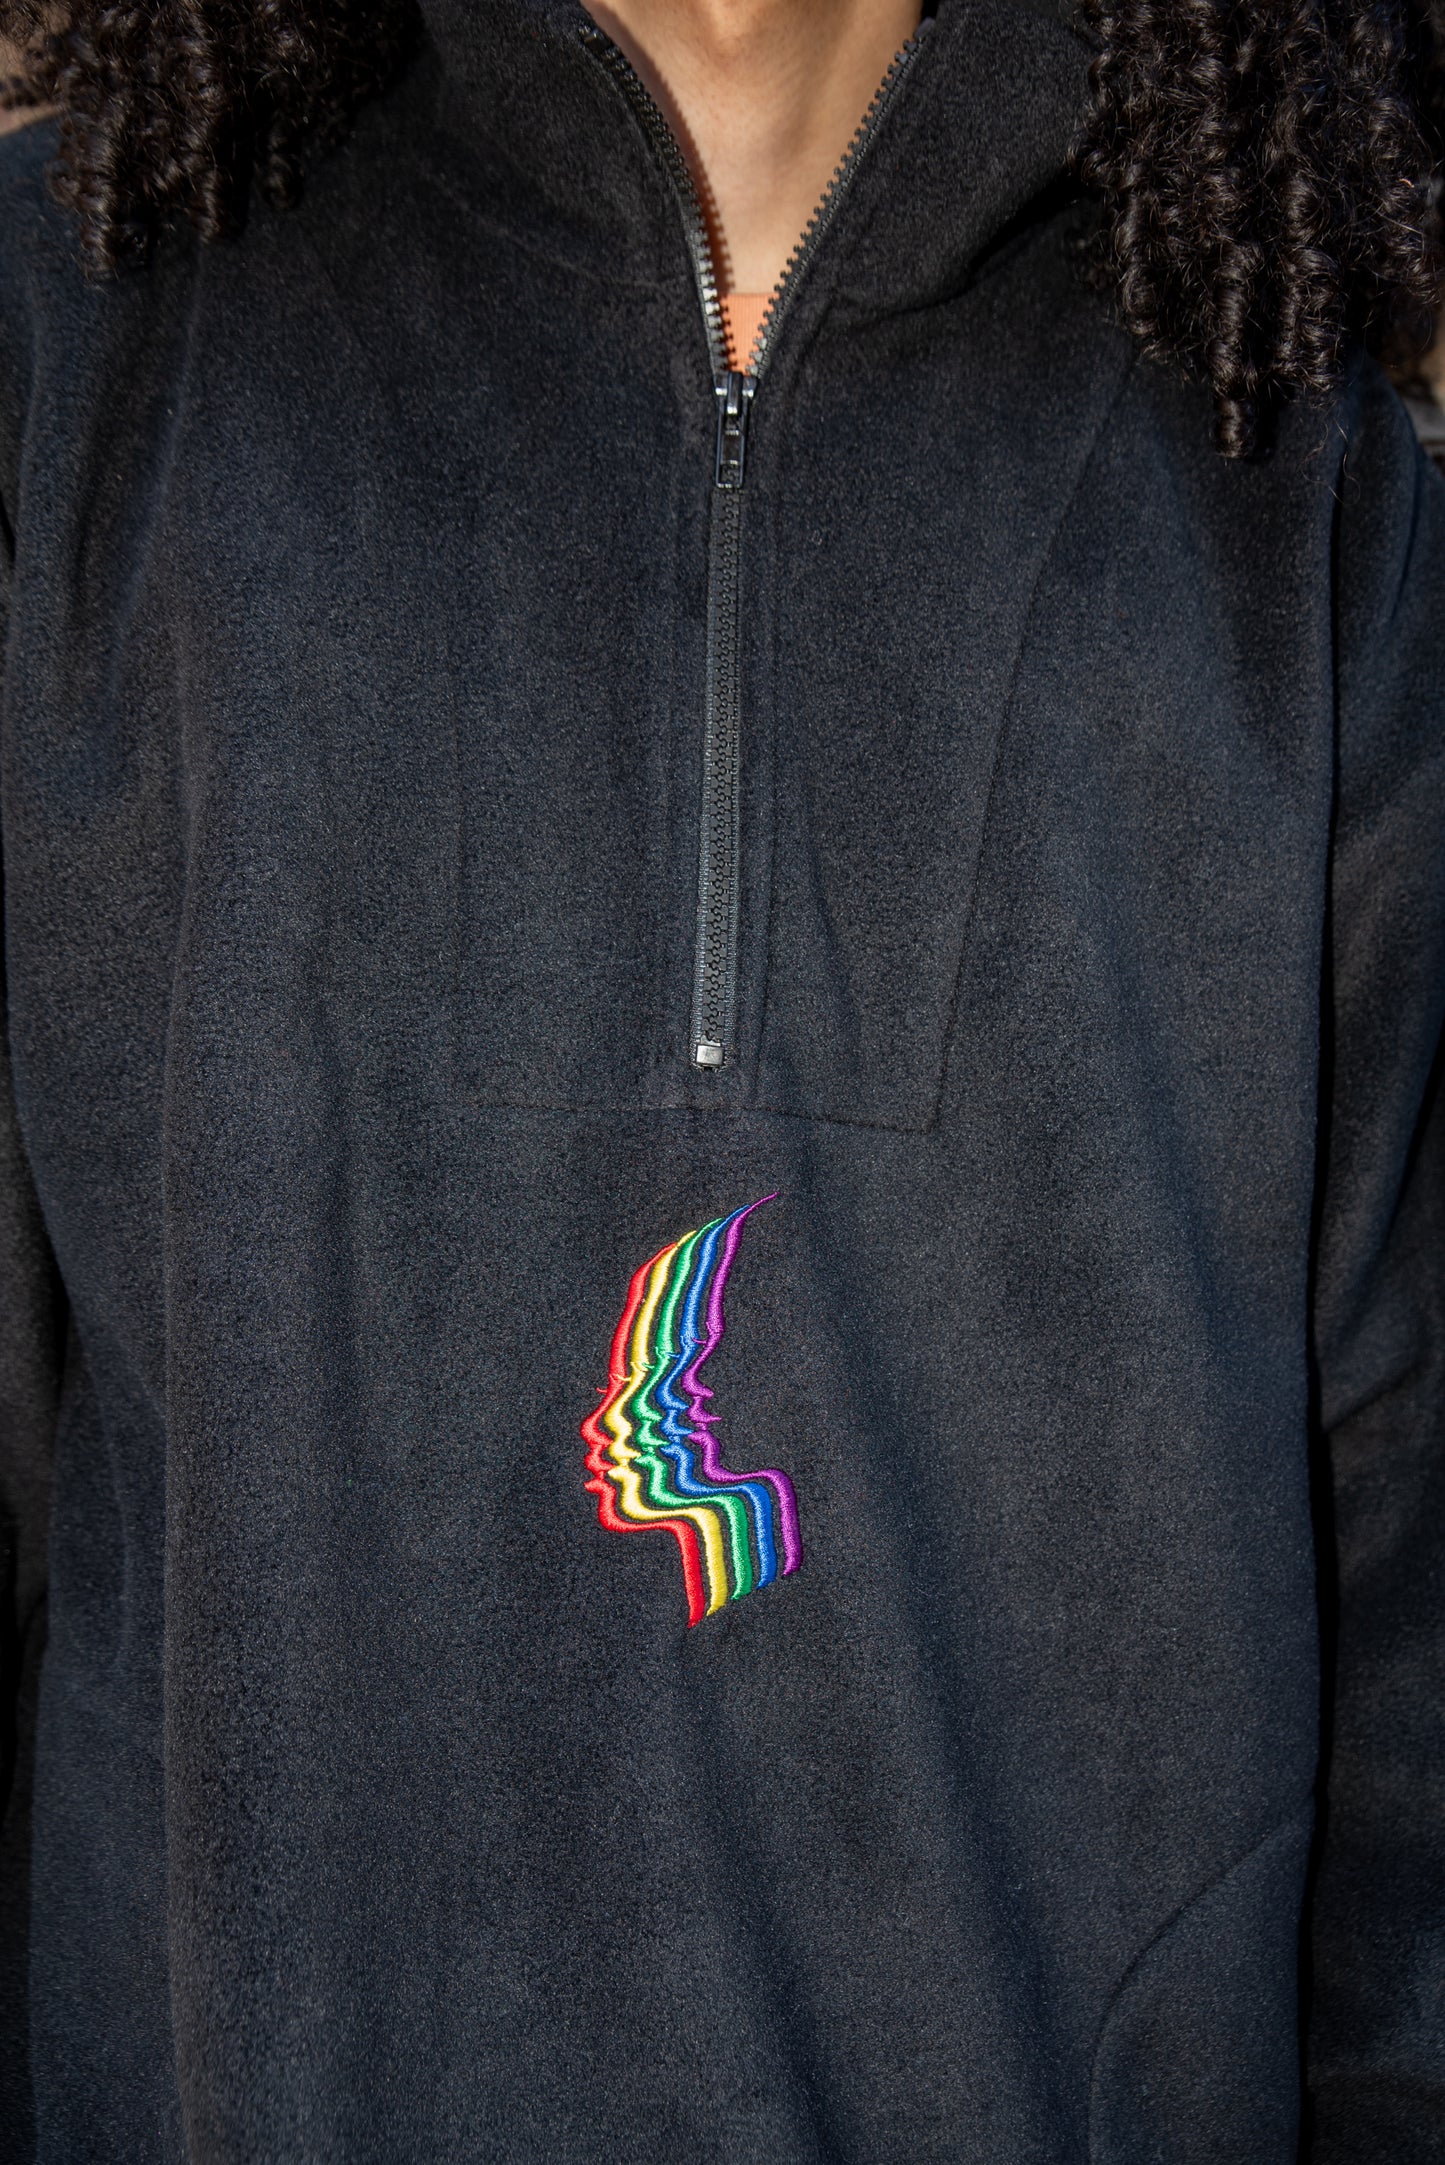 1/4 Zip Black Fleece with Rainbow Futuristic Embroidery